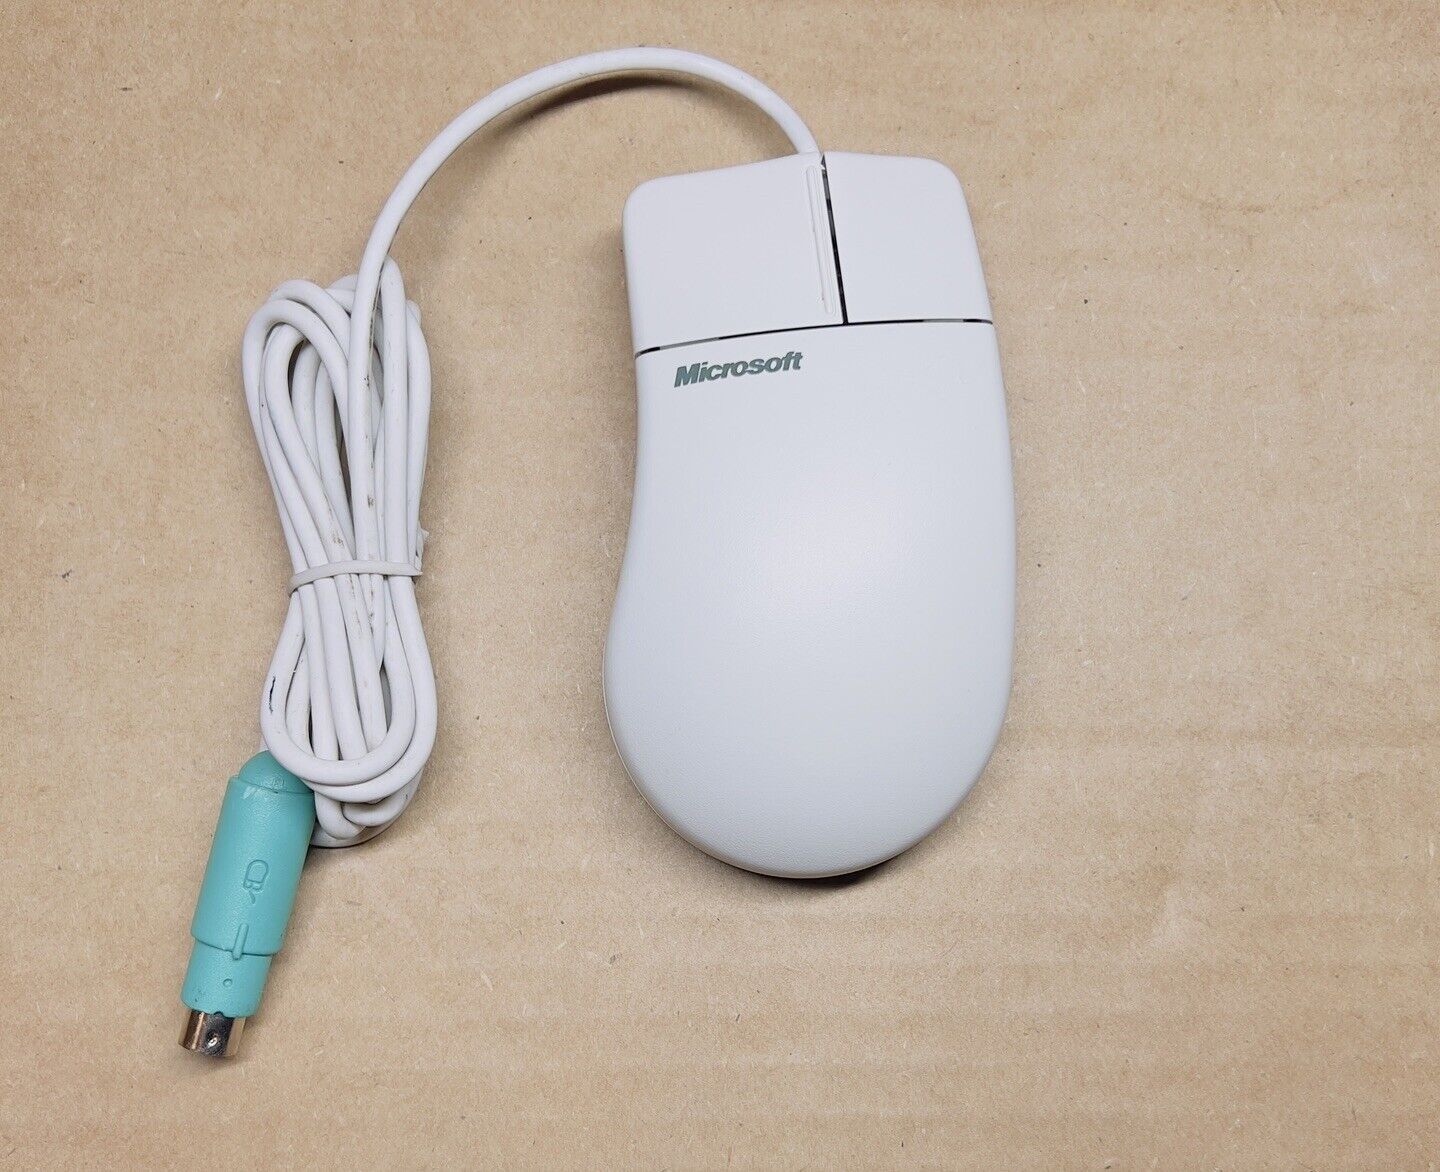 Microsoft PS2 Mouse RPkN